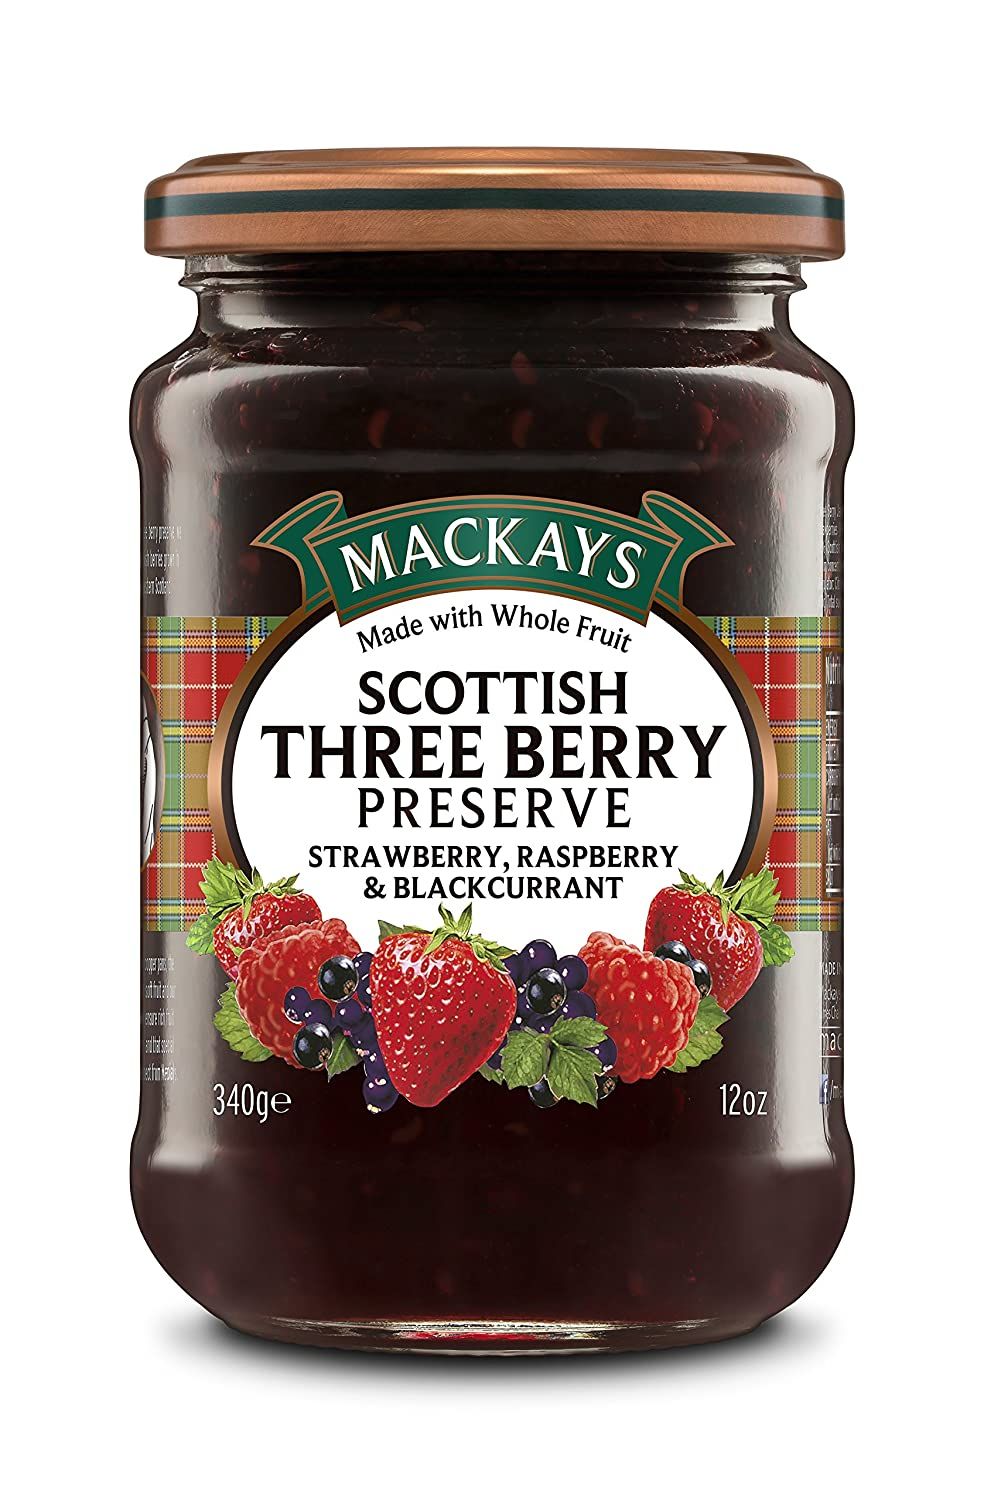 Mackays Scottish Three Berry Preserve Image